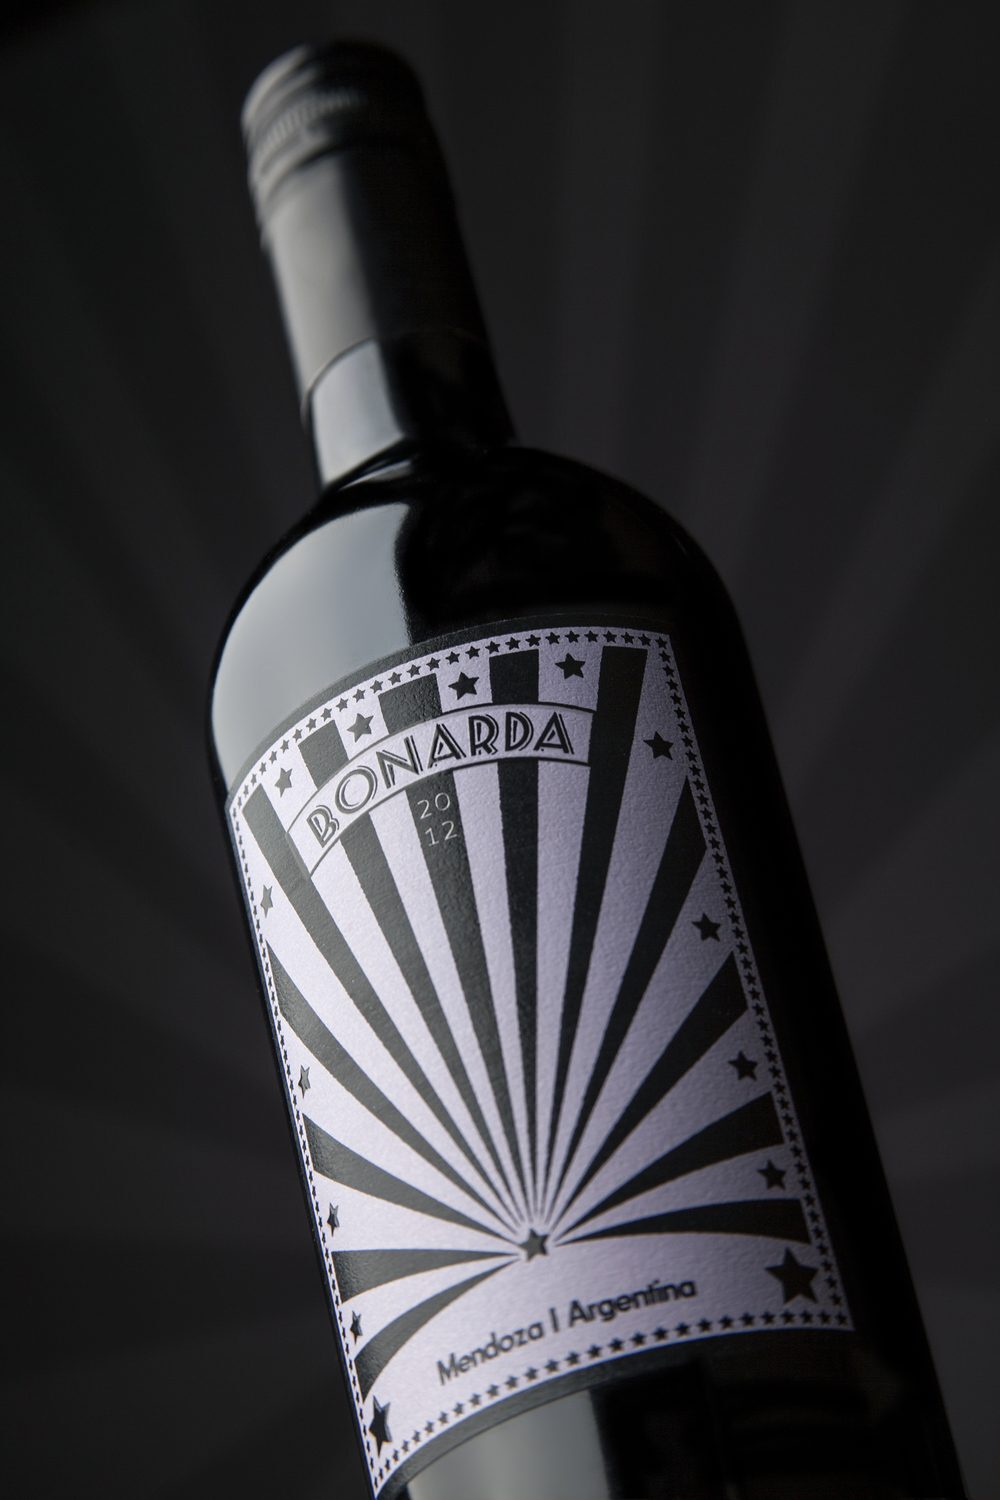 Caliptra – Bonarda wine